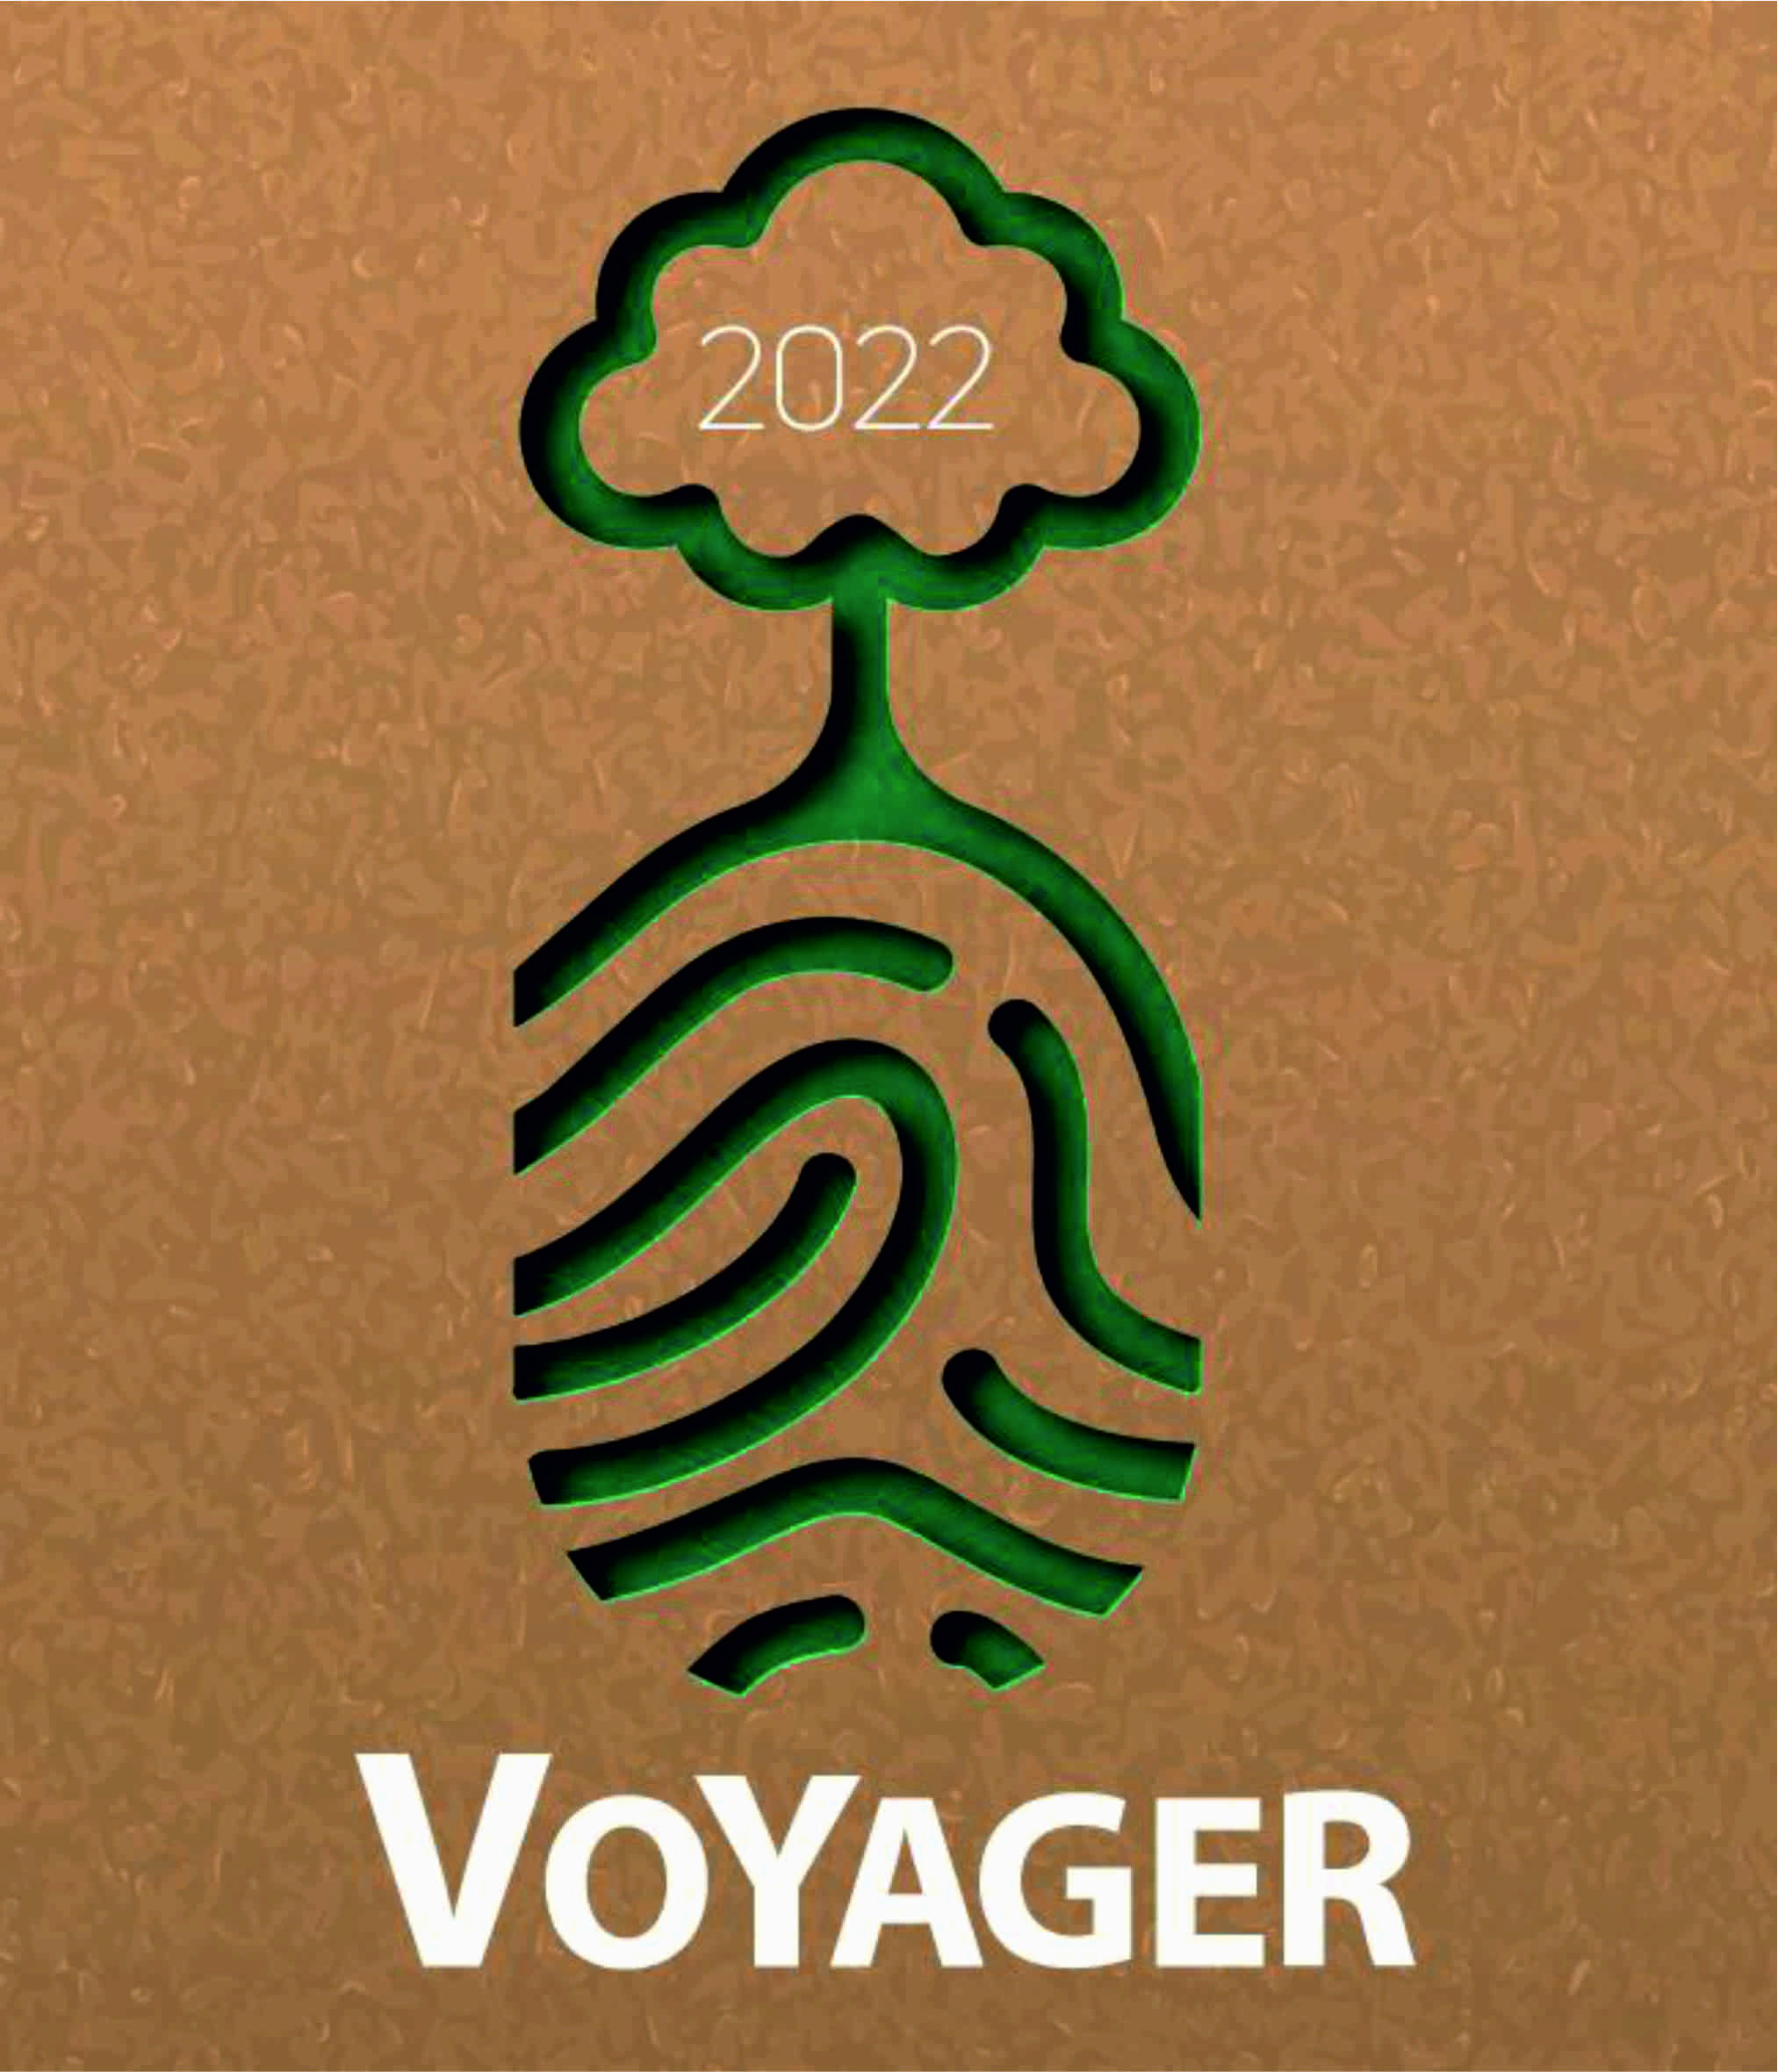 Voyager 22